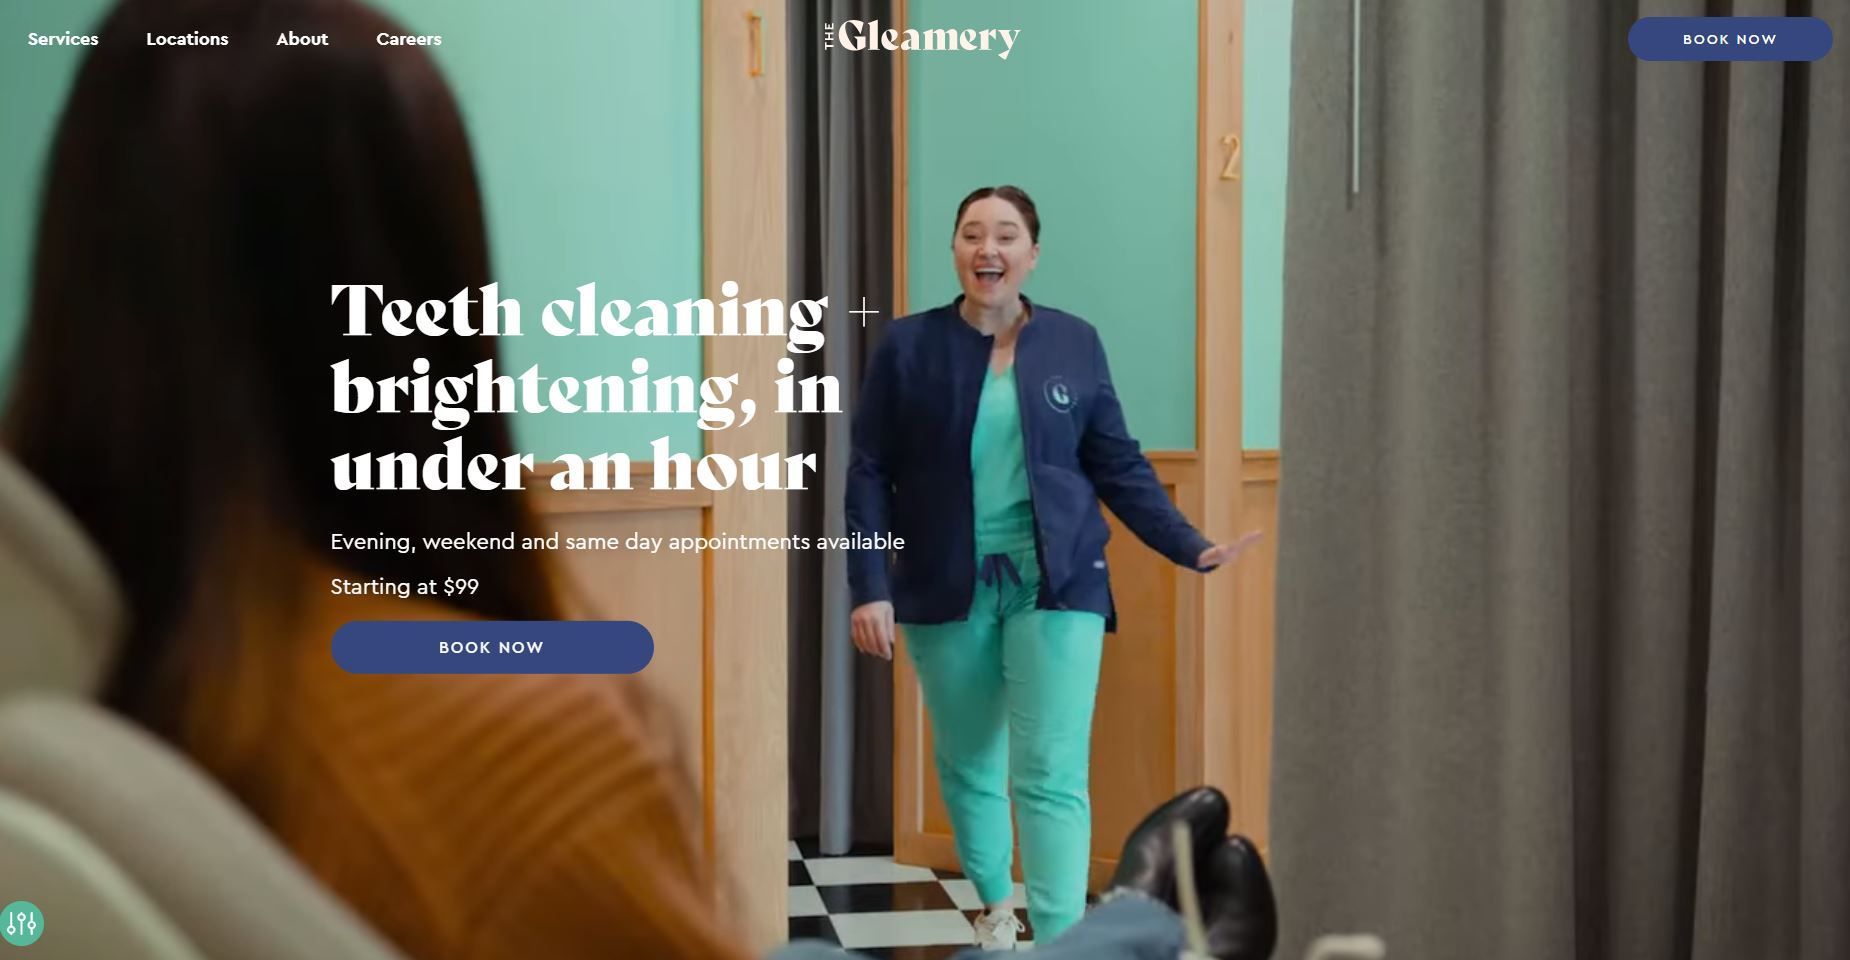 the gleamery website design